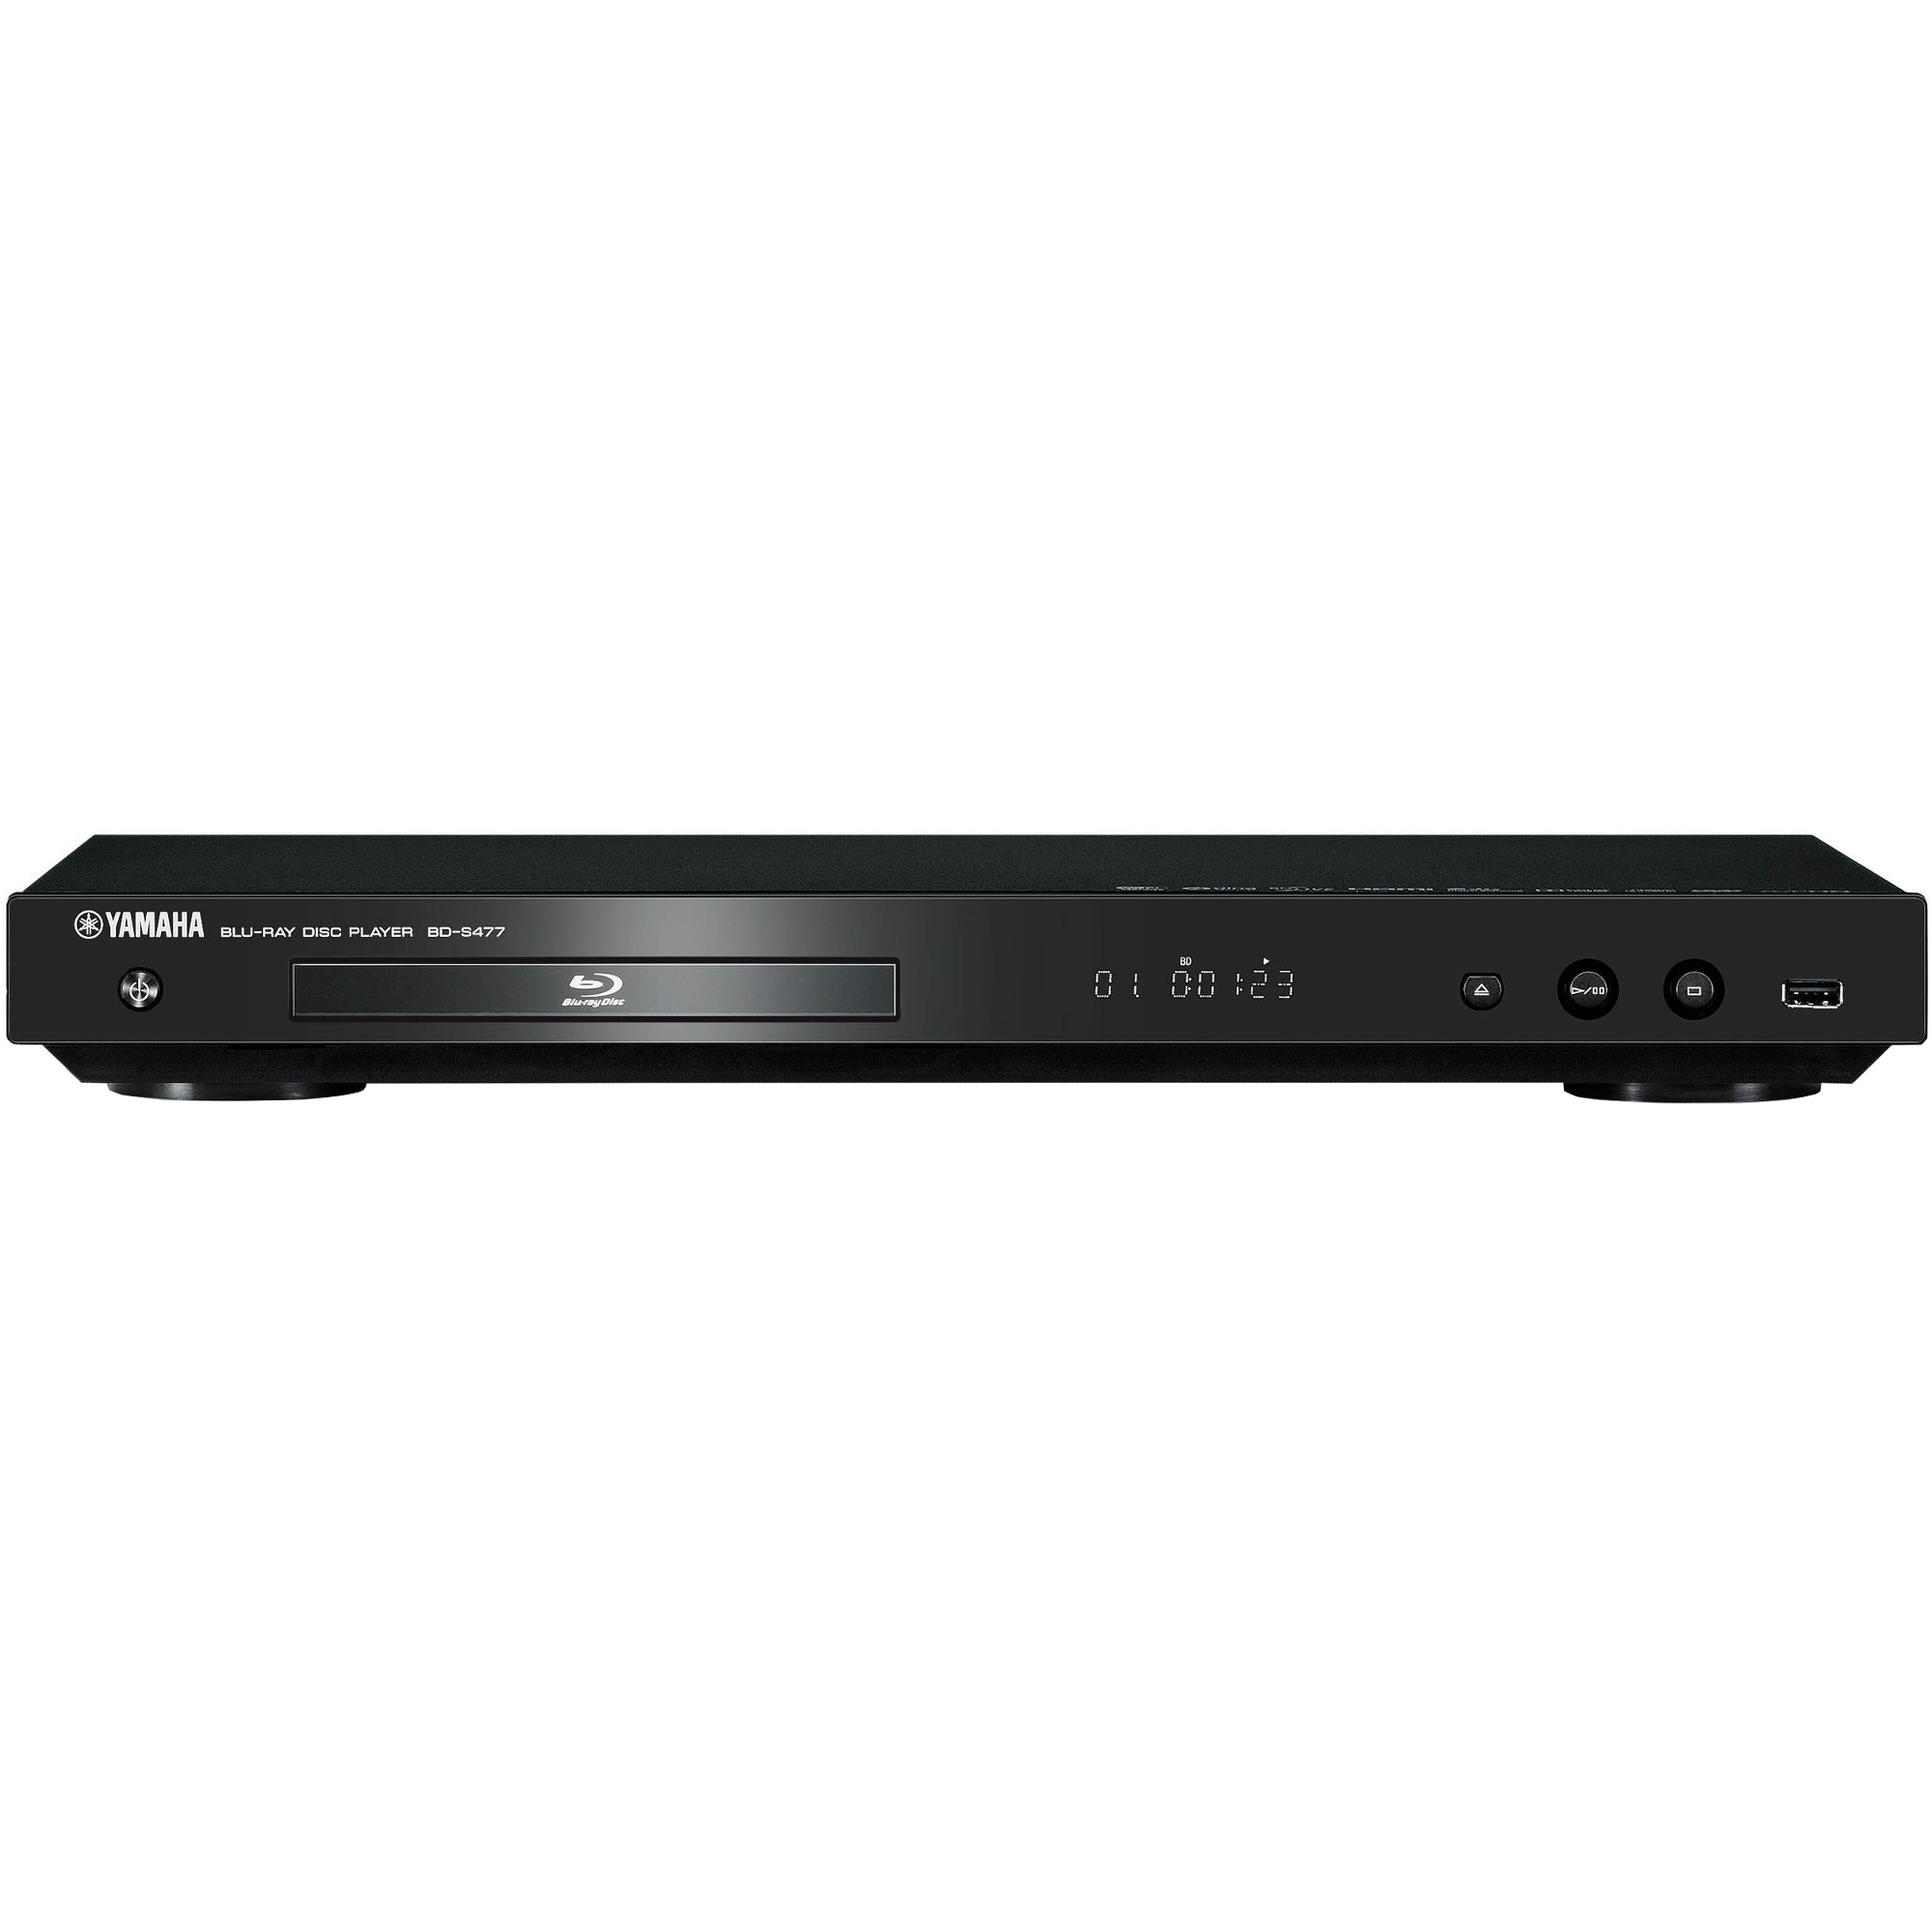  Blu-ray Player Yamaha BD-S477, Negru 